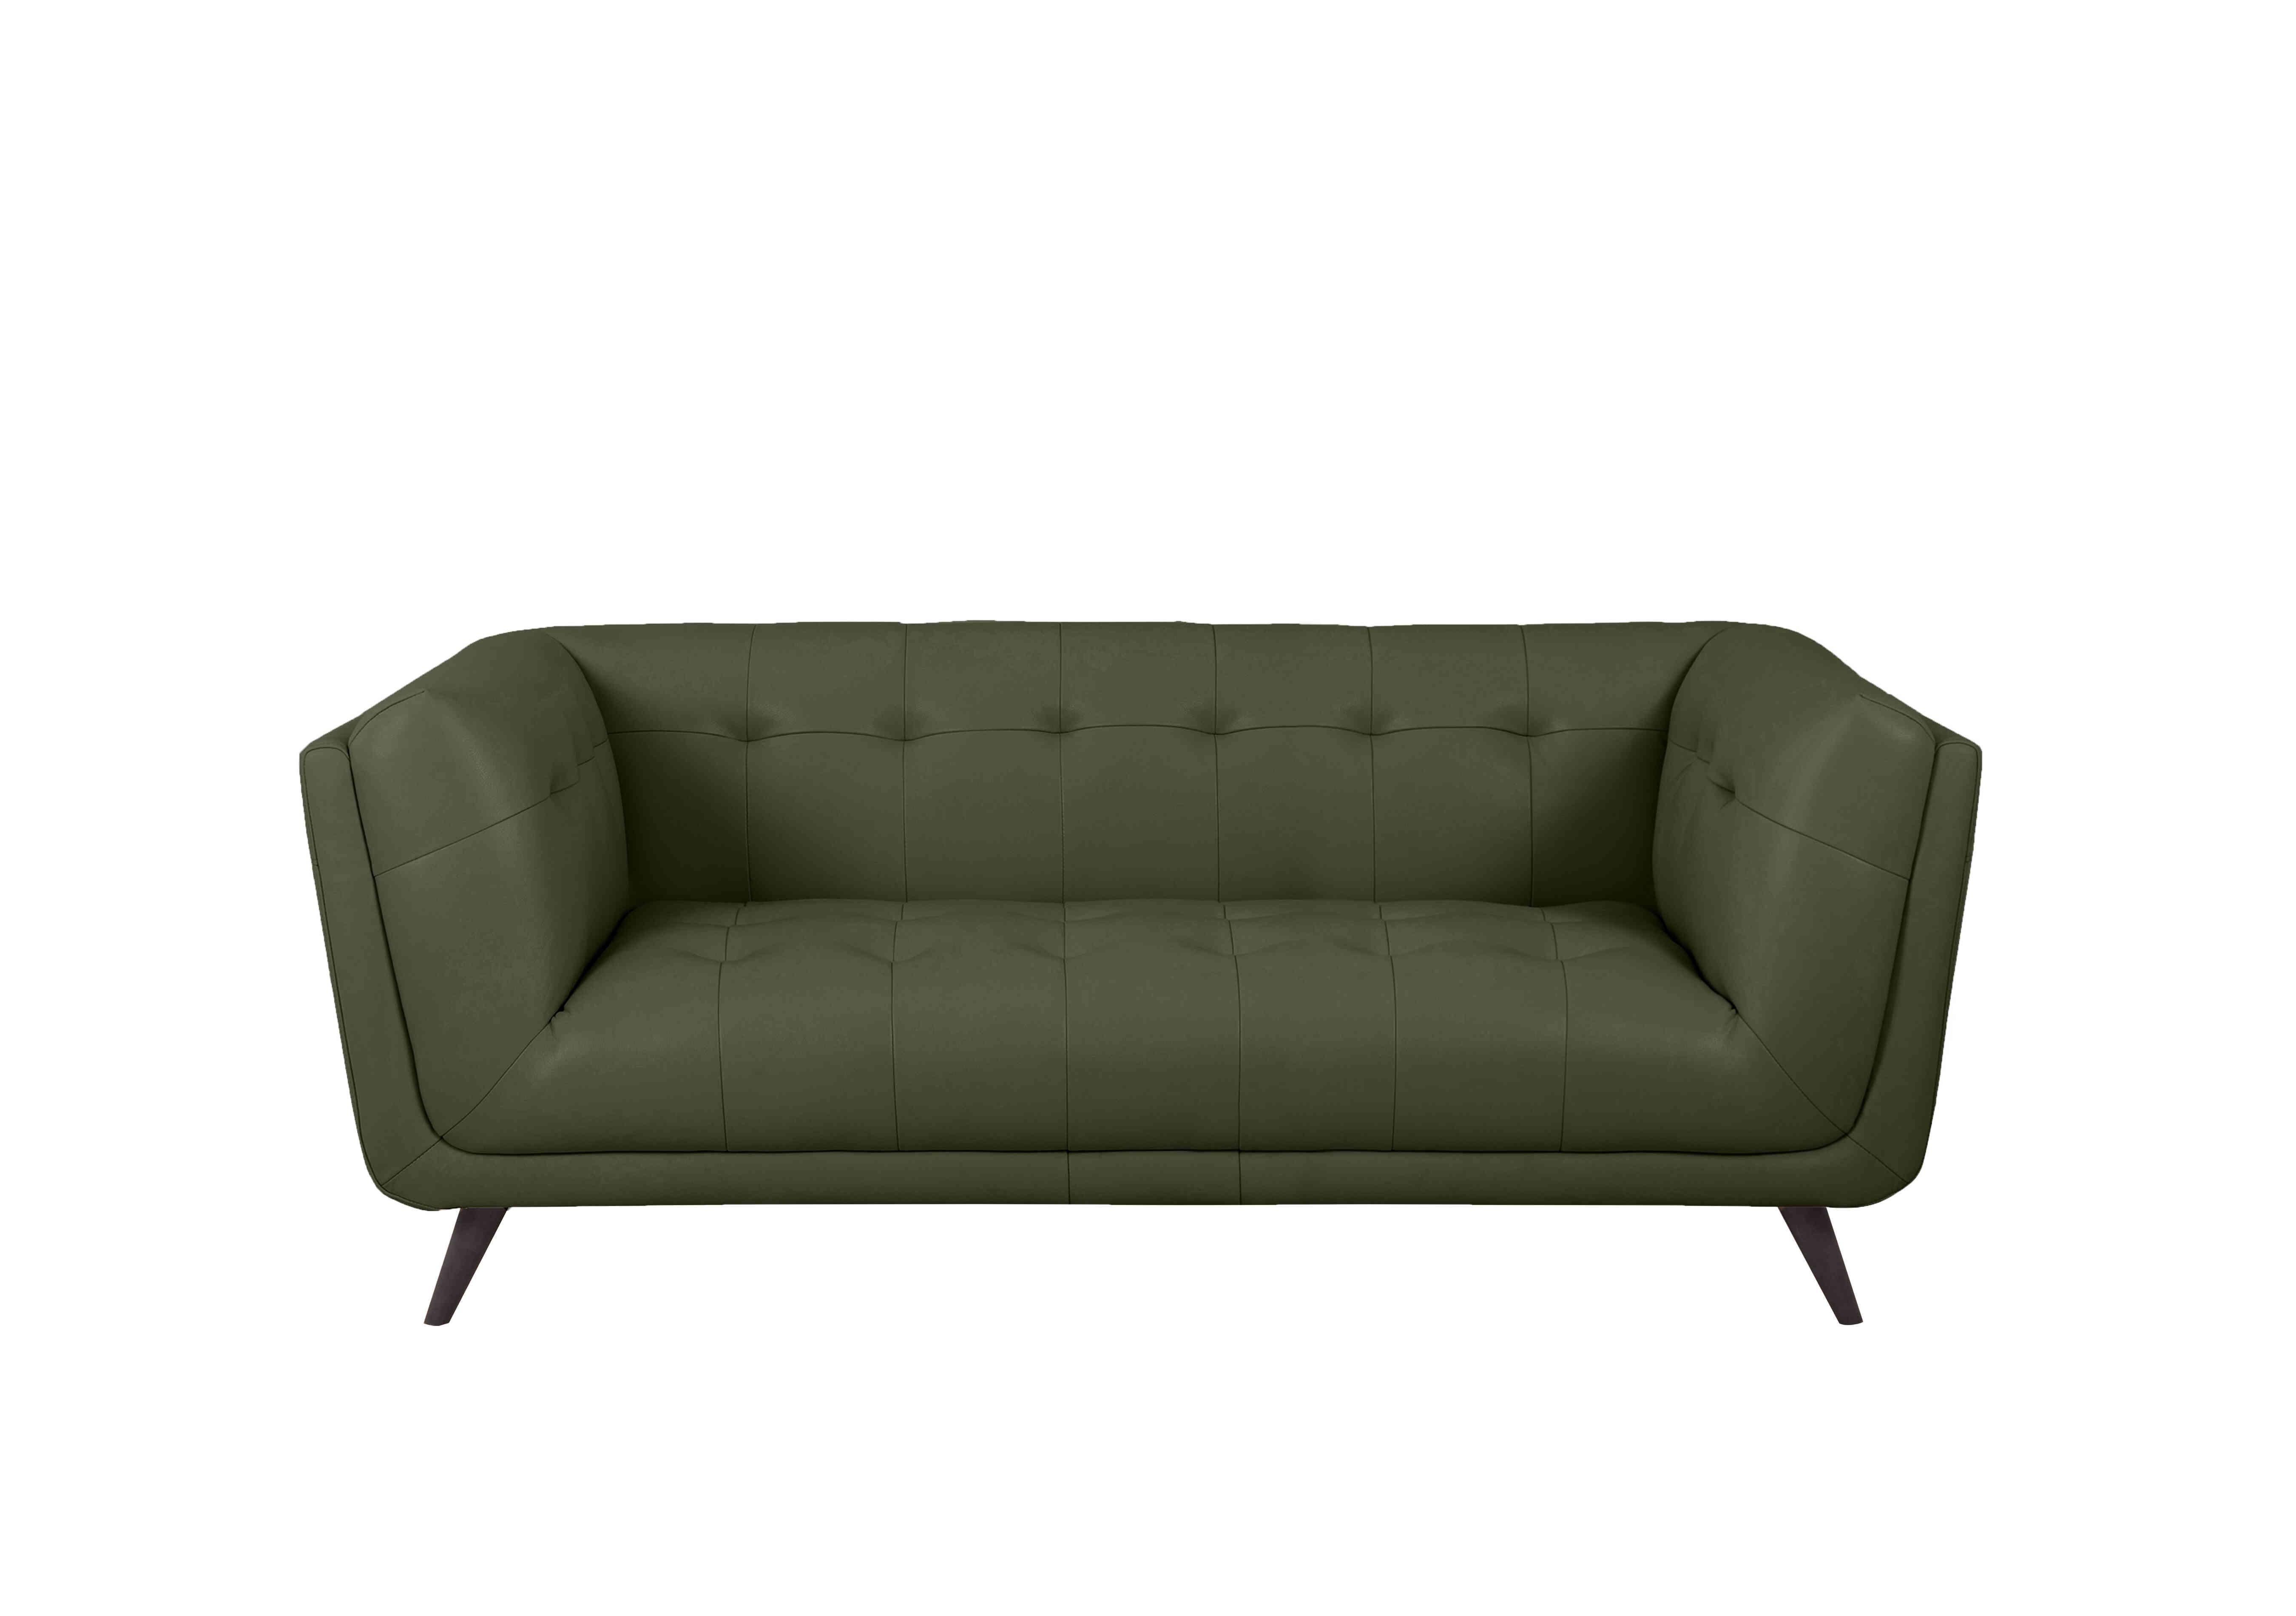 Rene Large 2 Seater Leather Sofa in Montana Oslo Pine on Furniture Village